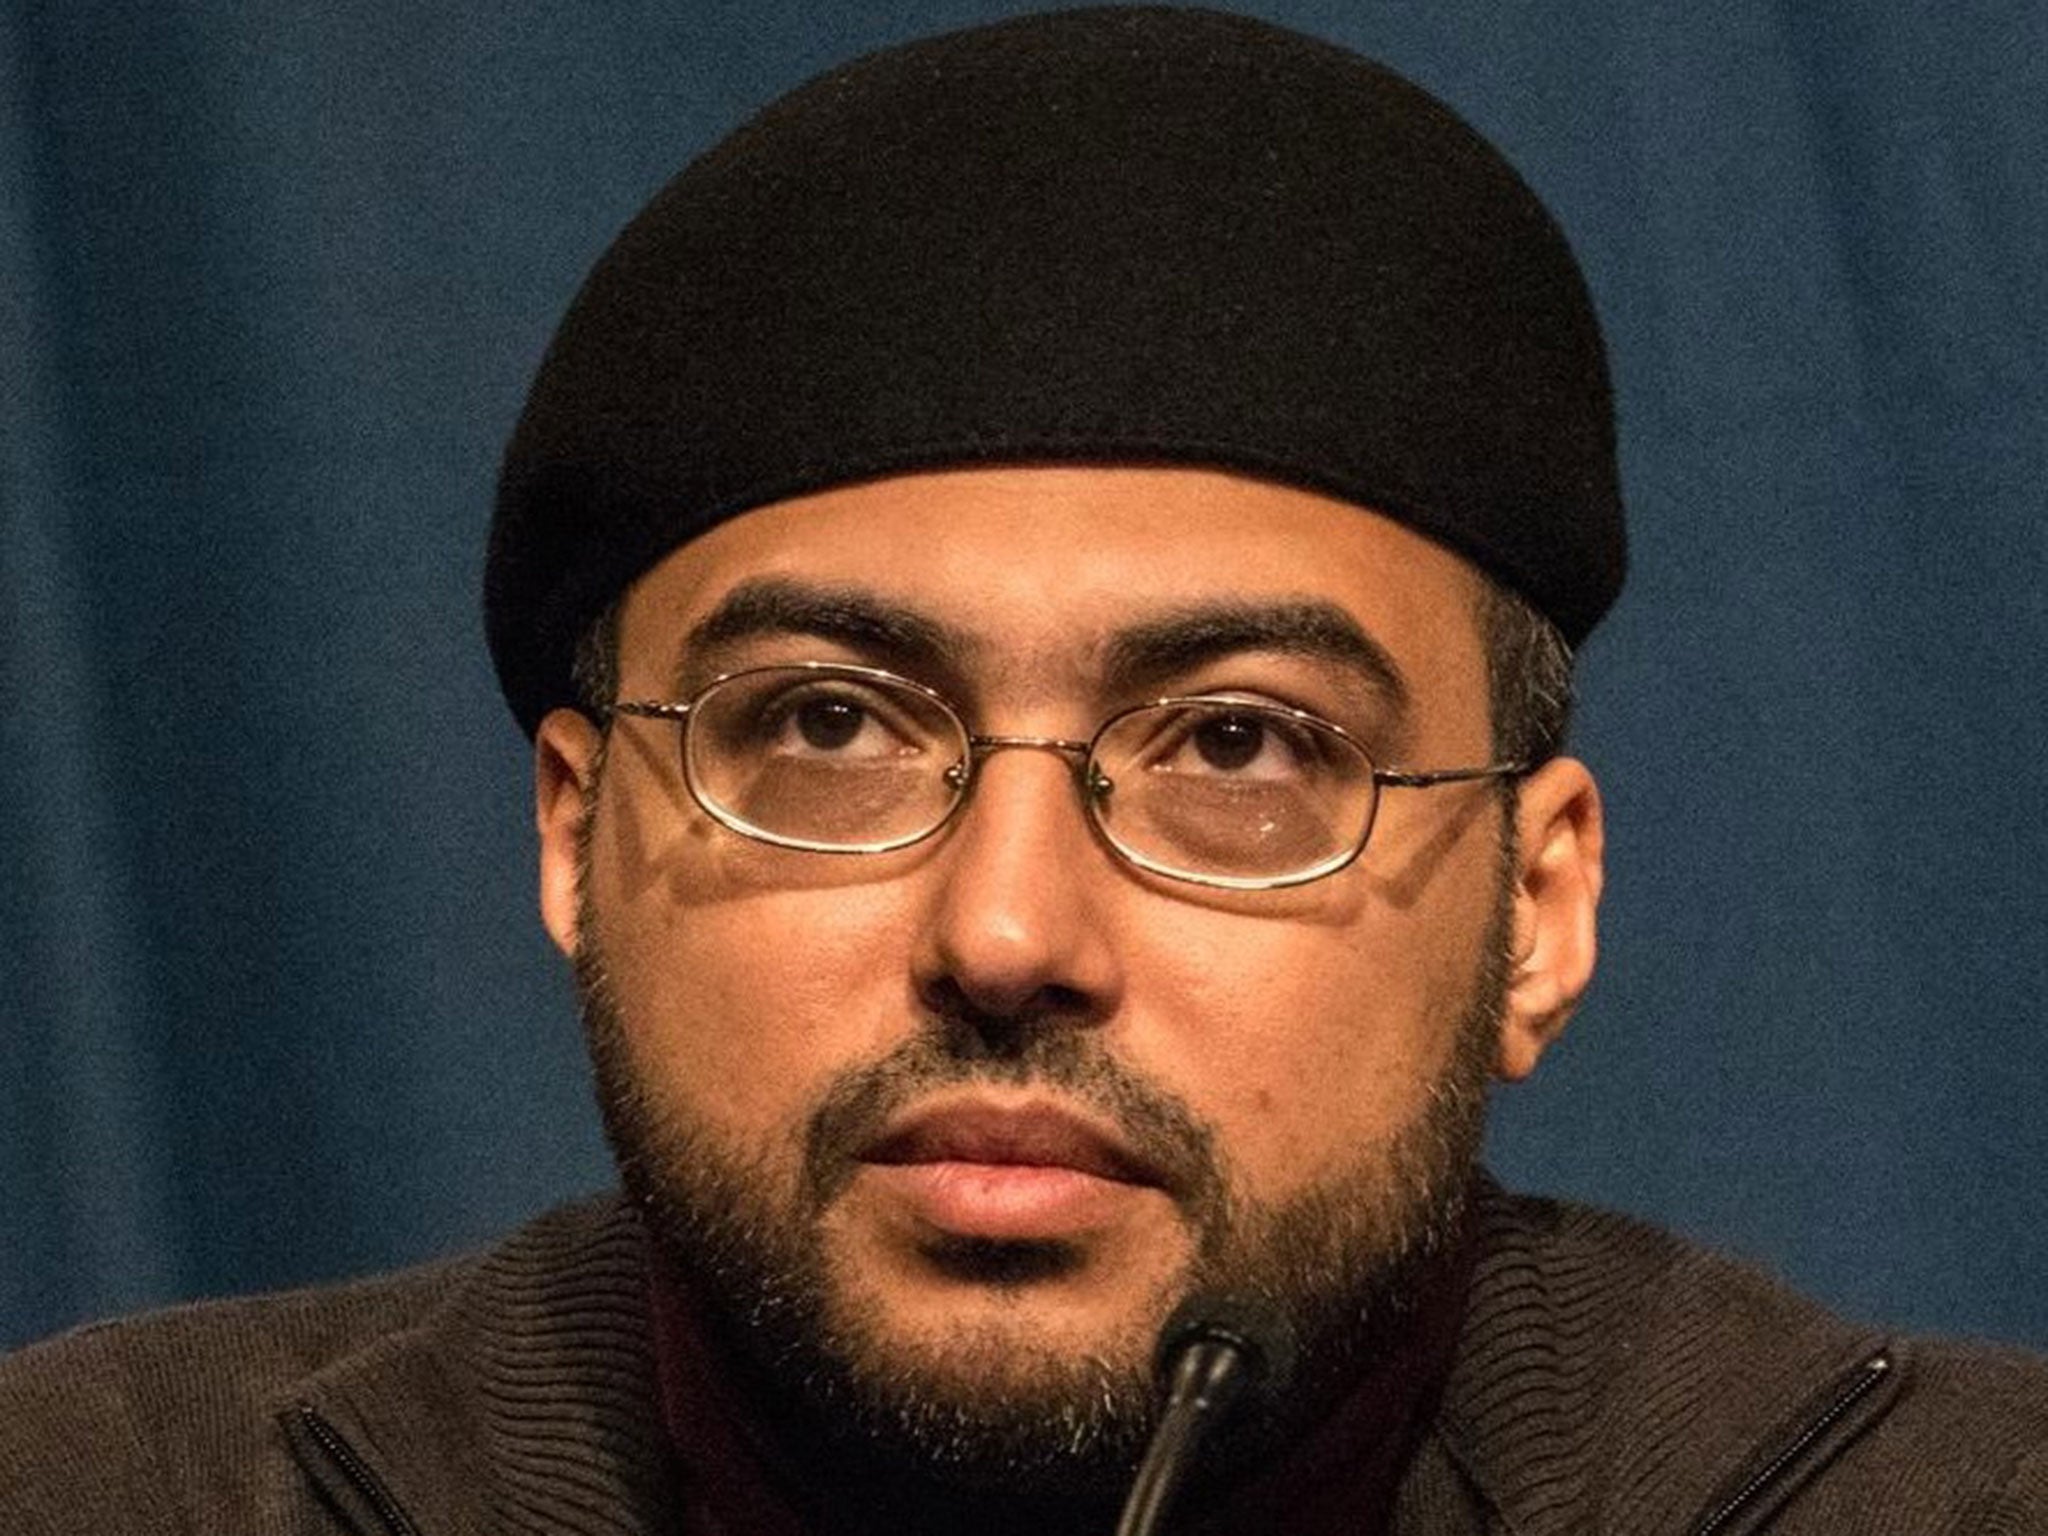 Iyad El-Baghdadi branded the Indonesian news site Republika as 'stupid and irresponsible'